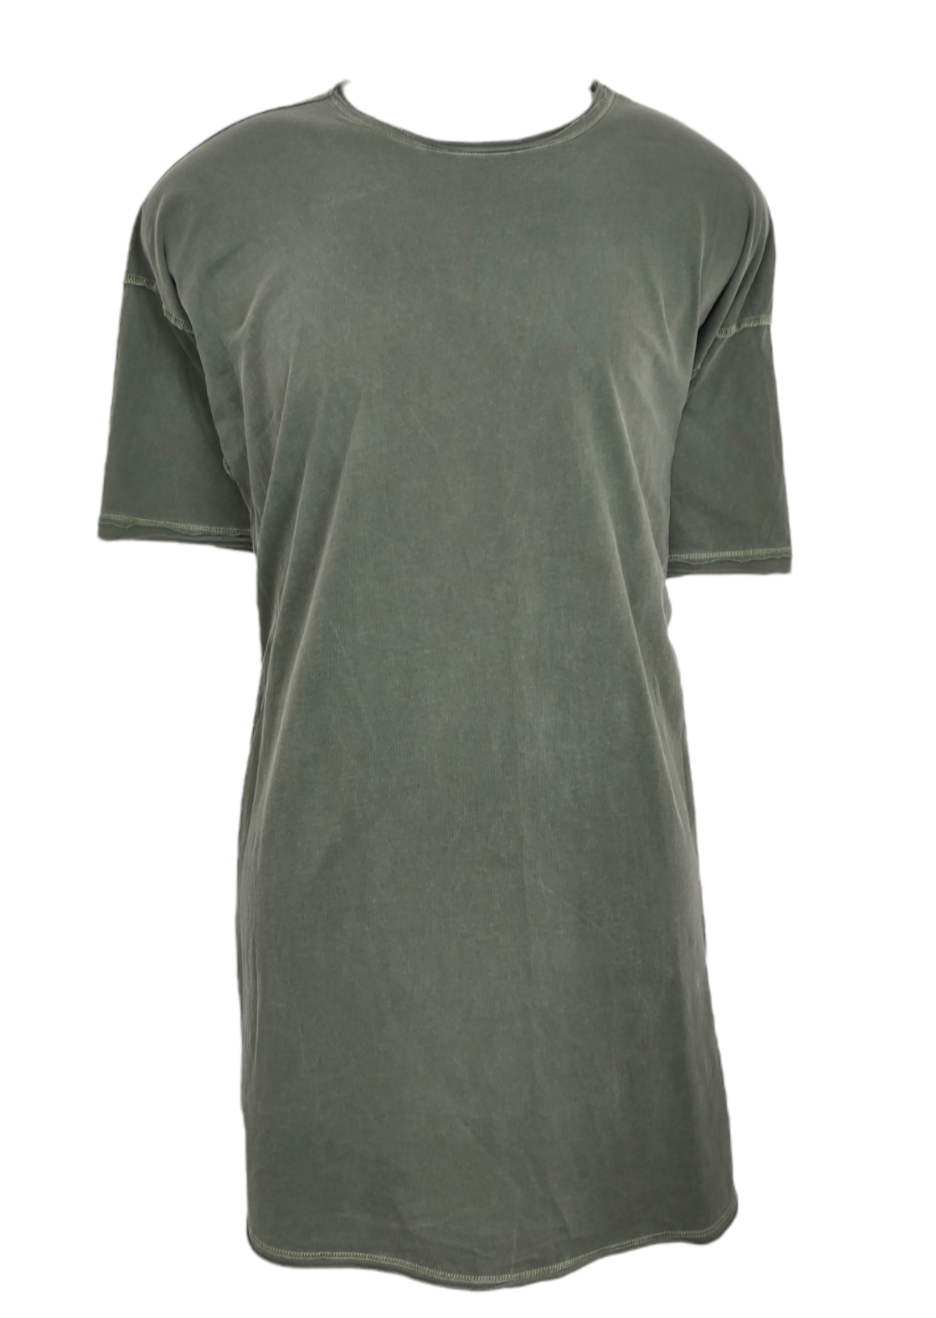 Aνδρική Mπλούζα - T-Shirt ASOS σε Χακί Χρώμα (S/M)